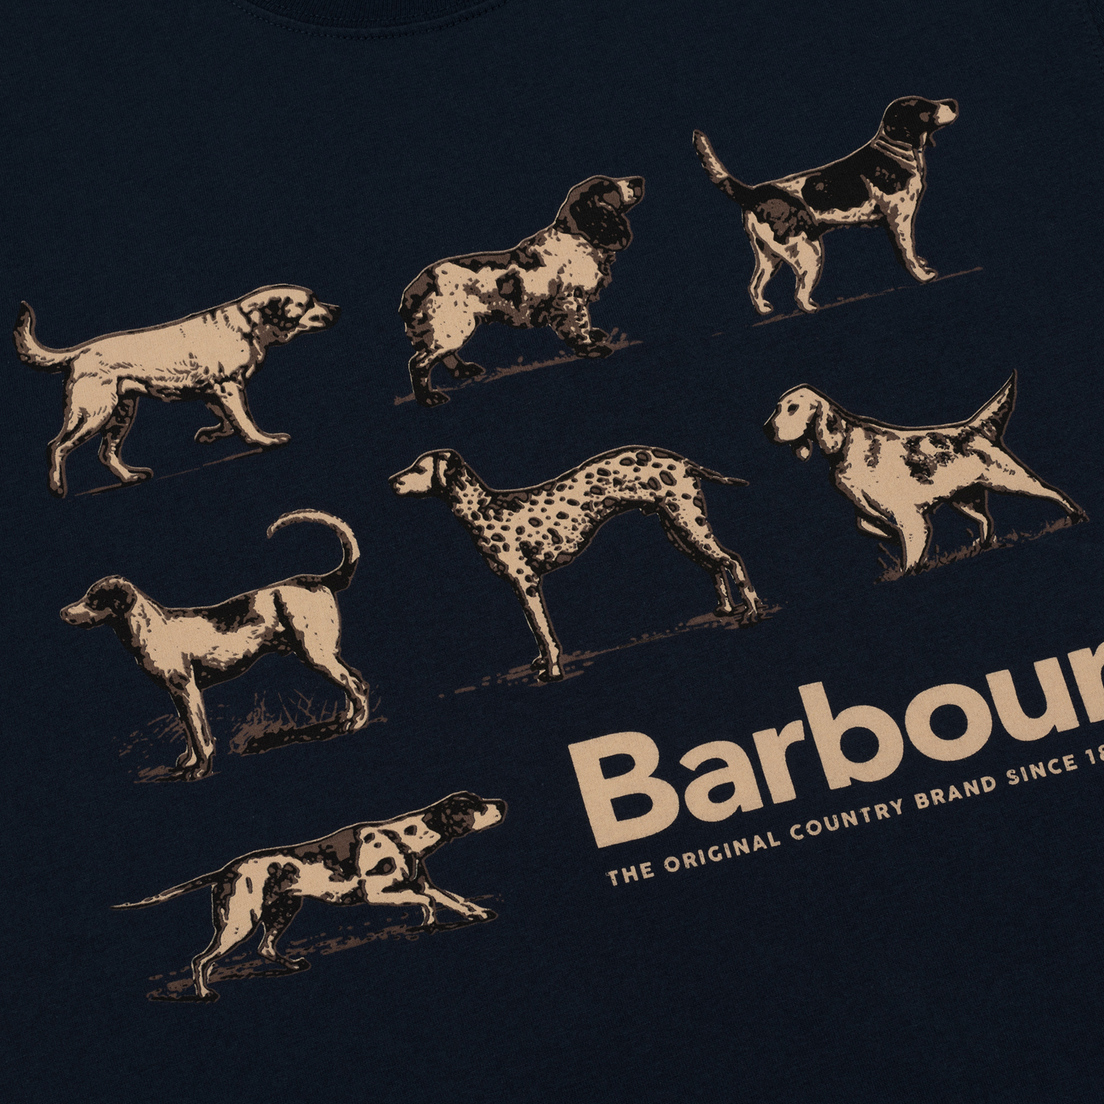 Barbour Мужская футболка Hound